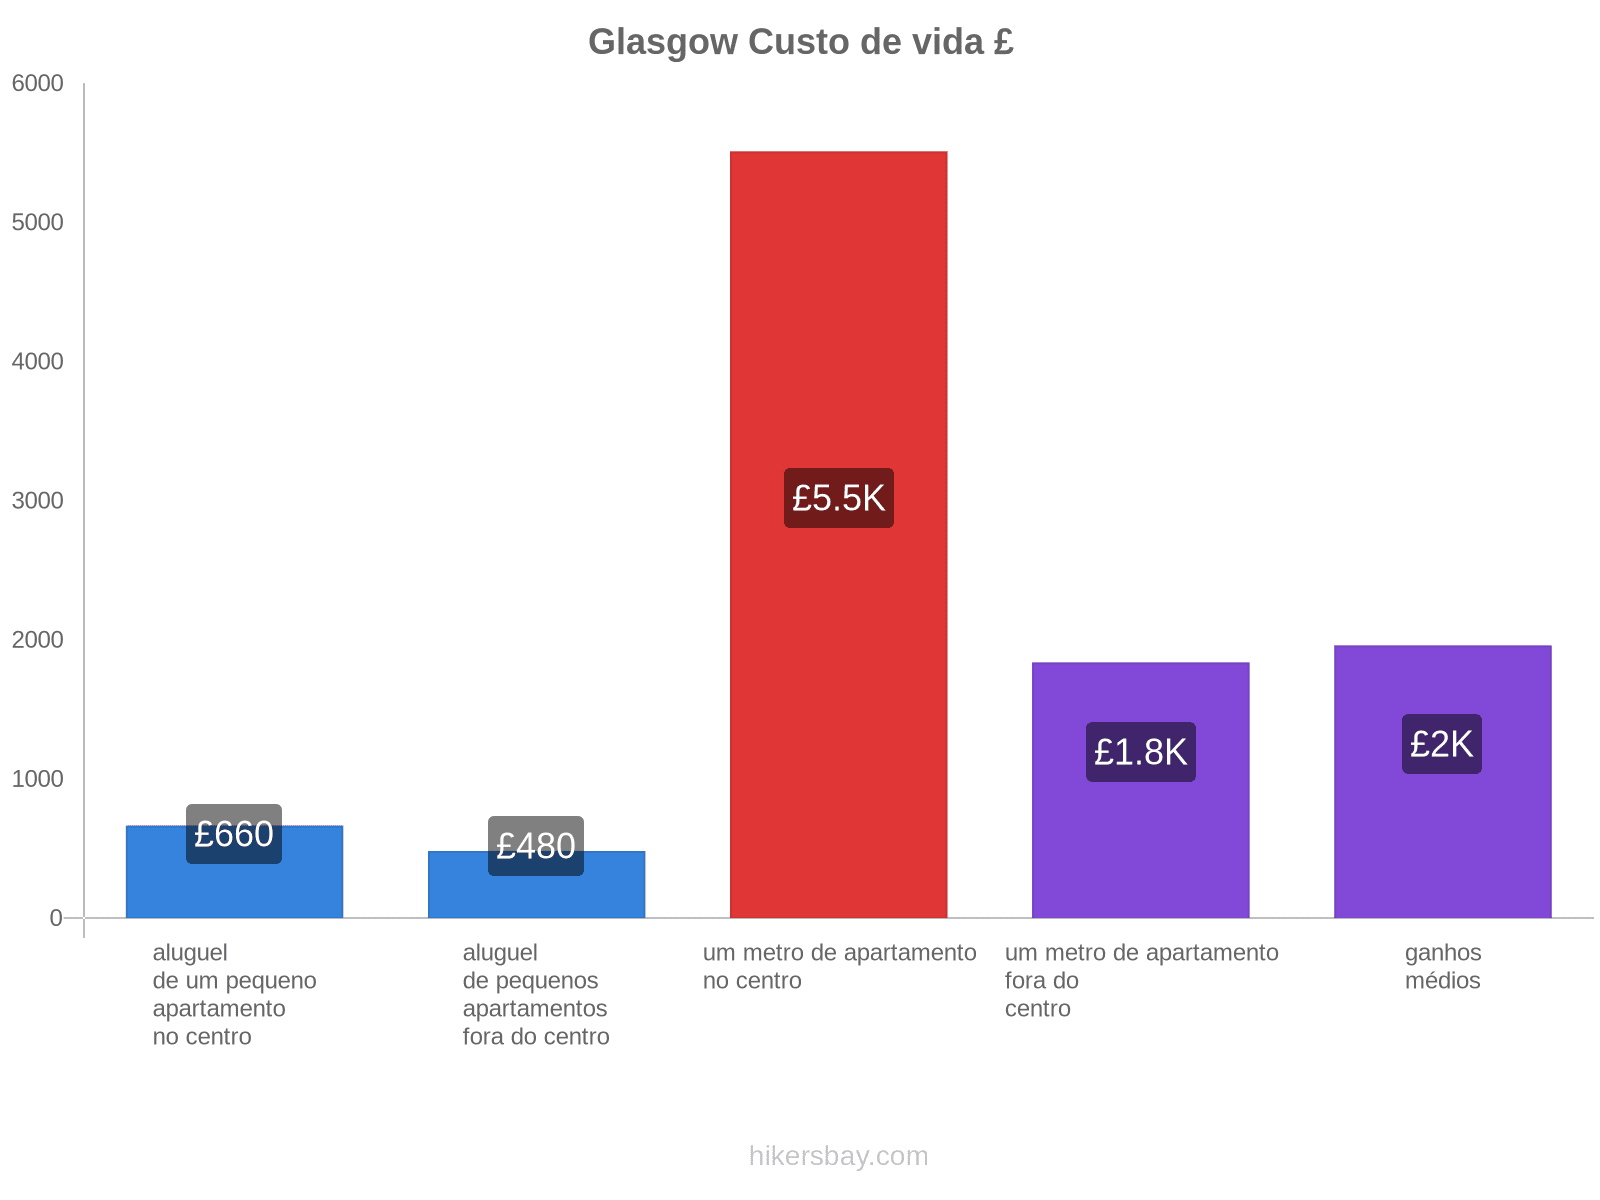 Glasgow custo de vida hikersbay.com